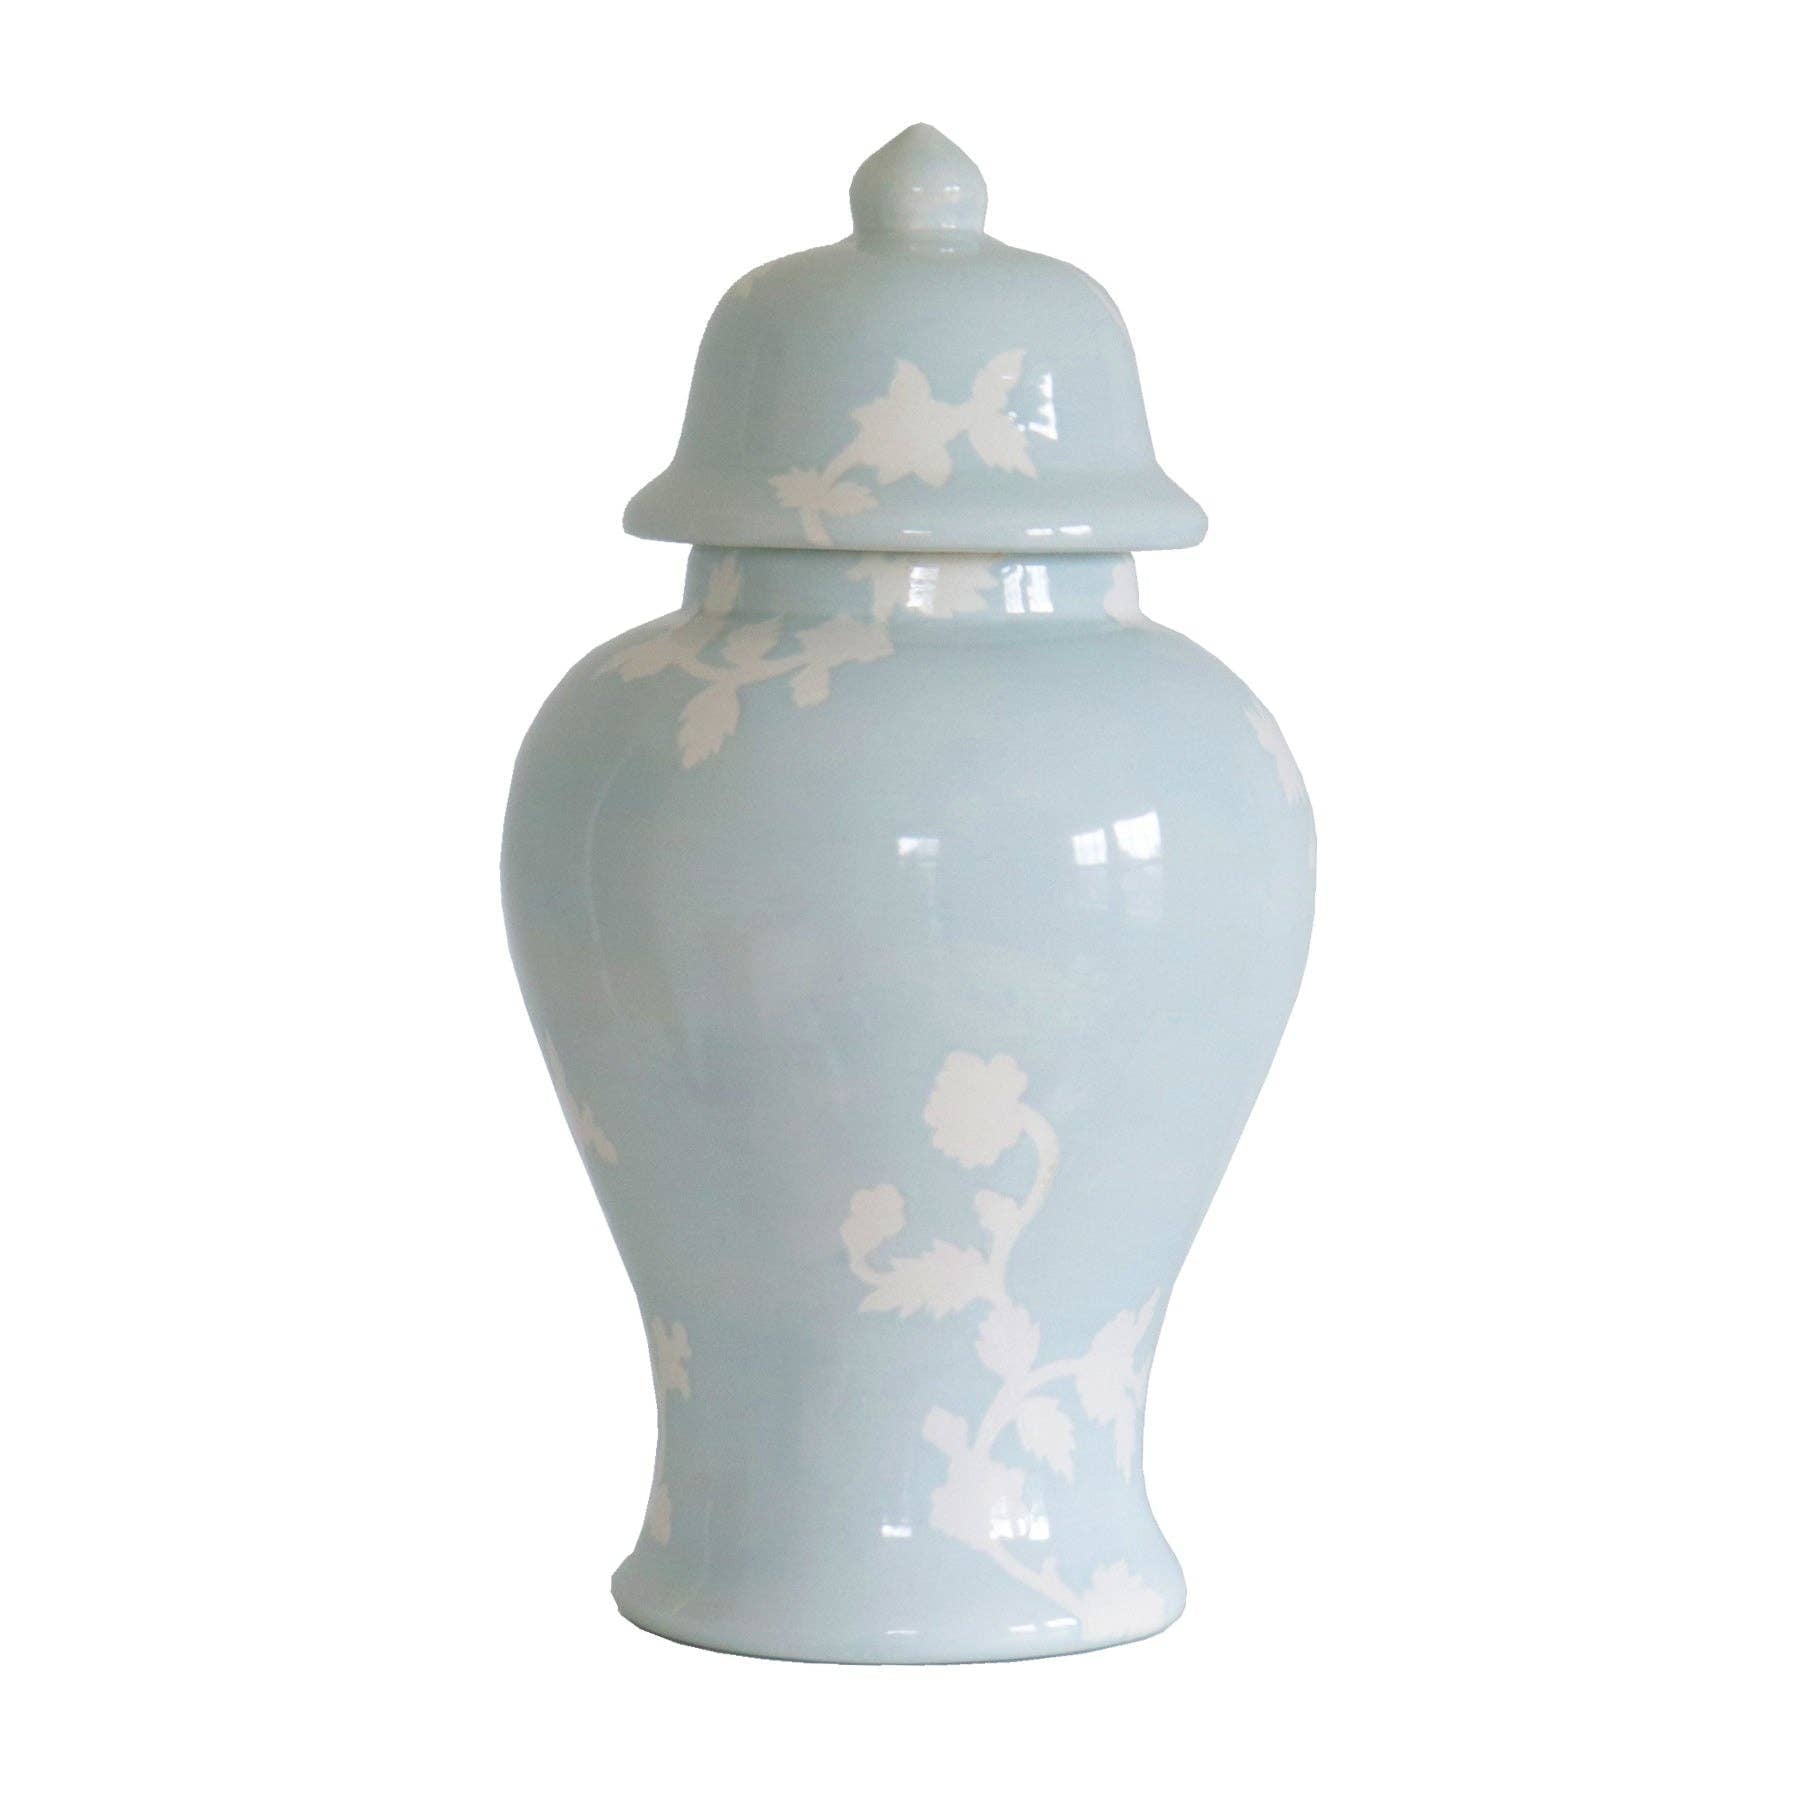 Chinoiserie Dreams Ginger Jar in Hydrangea Light Blue - Medium - The Preppy Bunny